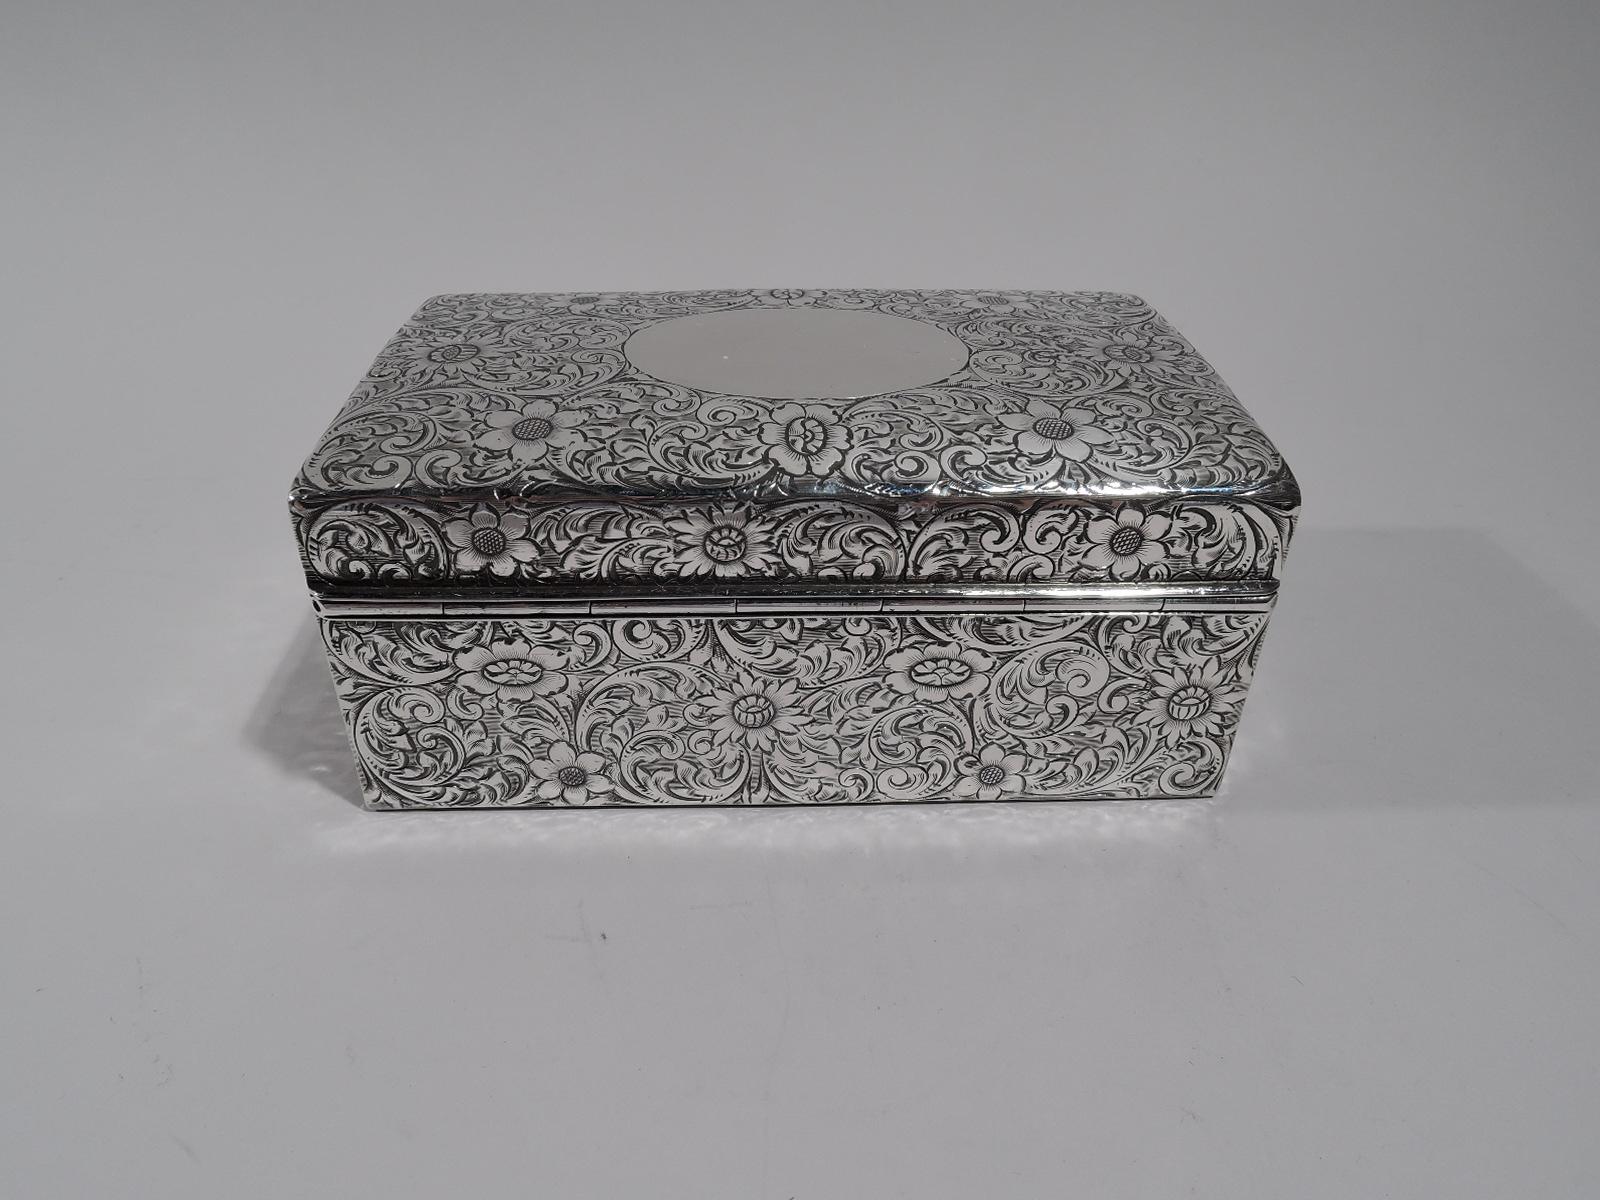 20th Century Antique American Art Nouveau Sterling Silver Jewelry Casket Box